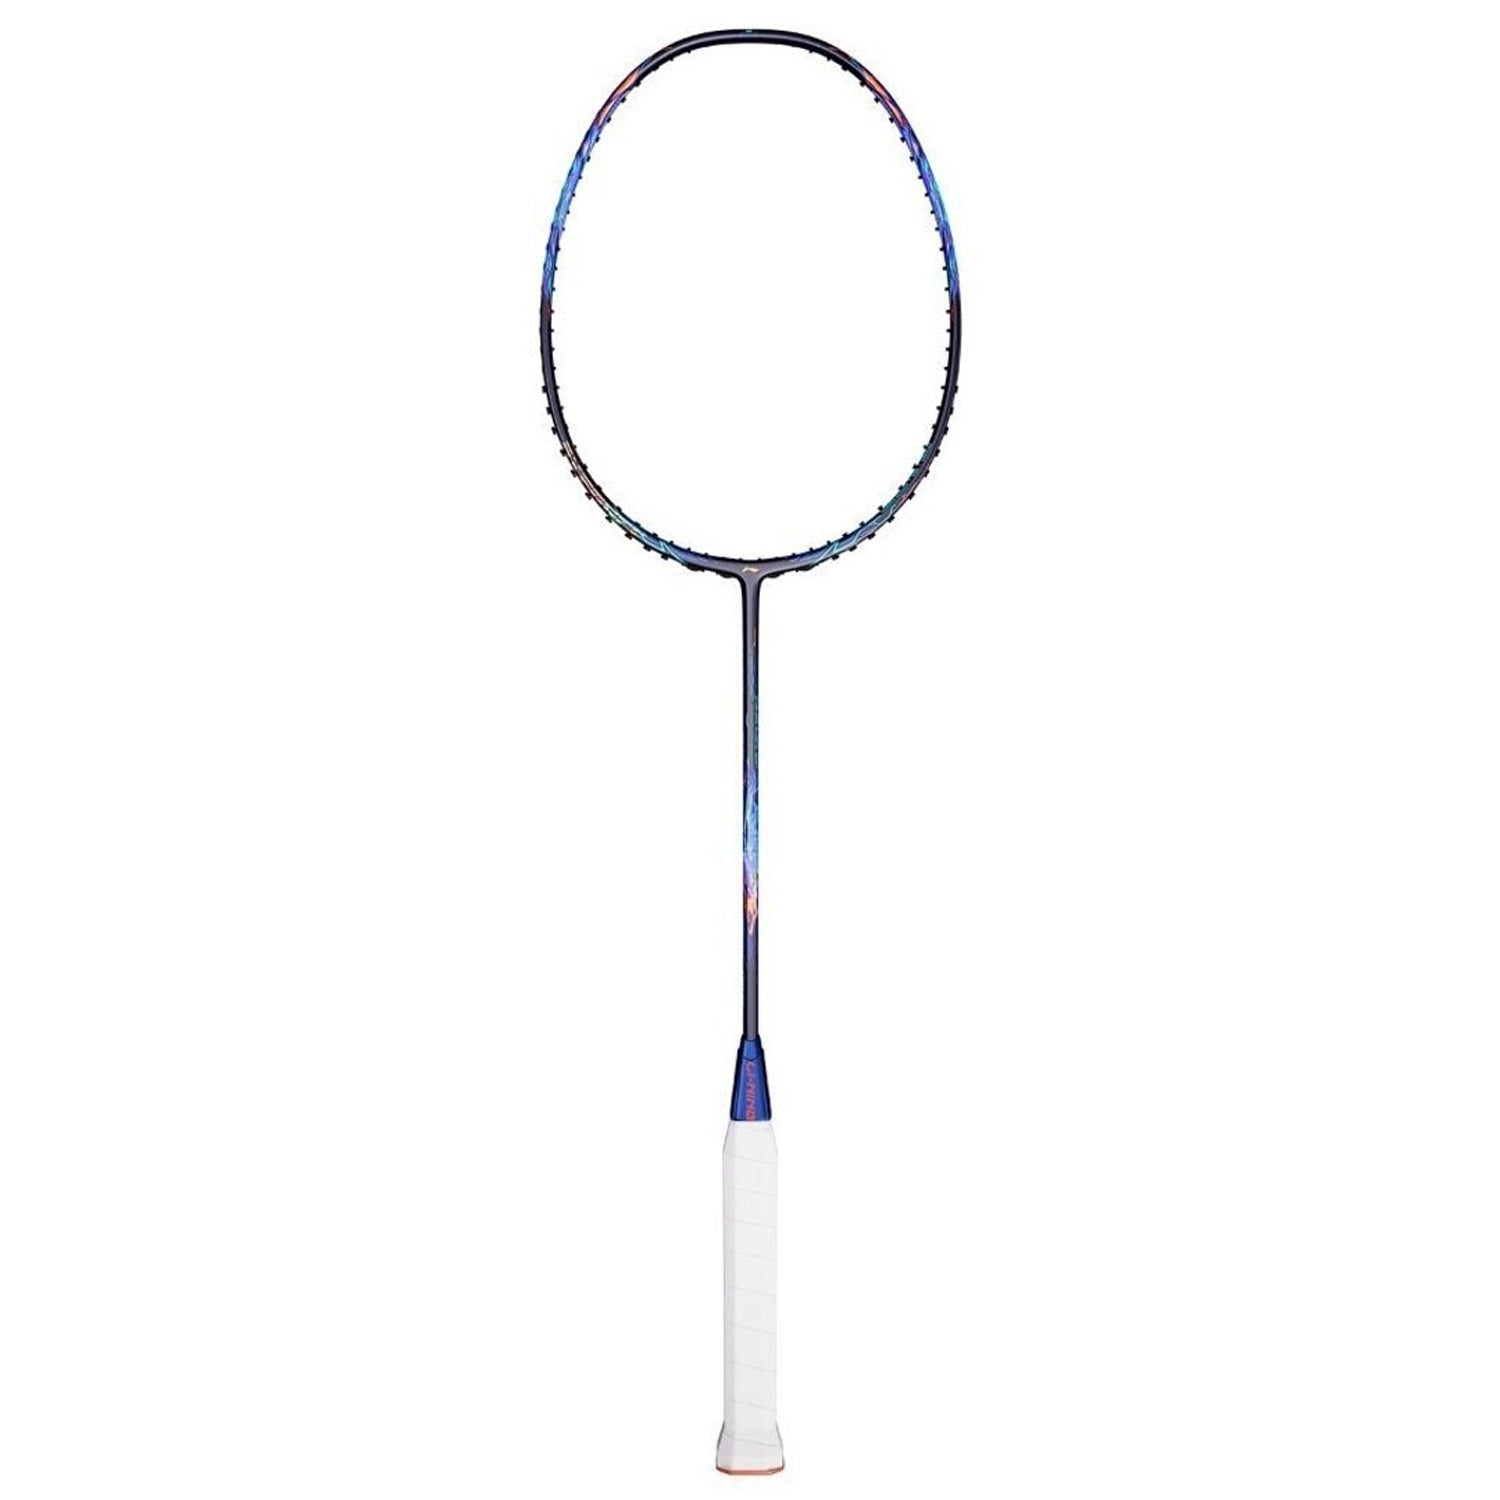 Li-Ning AXForce 90 Unstrung Badminton Racquet, Navy/Blue - Best Price online Prokicksports.com